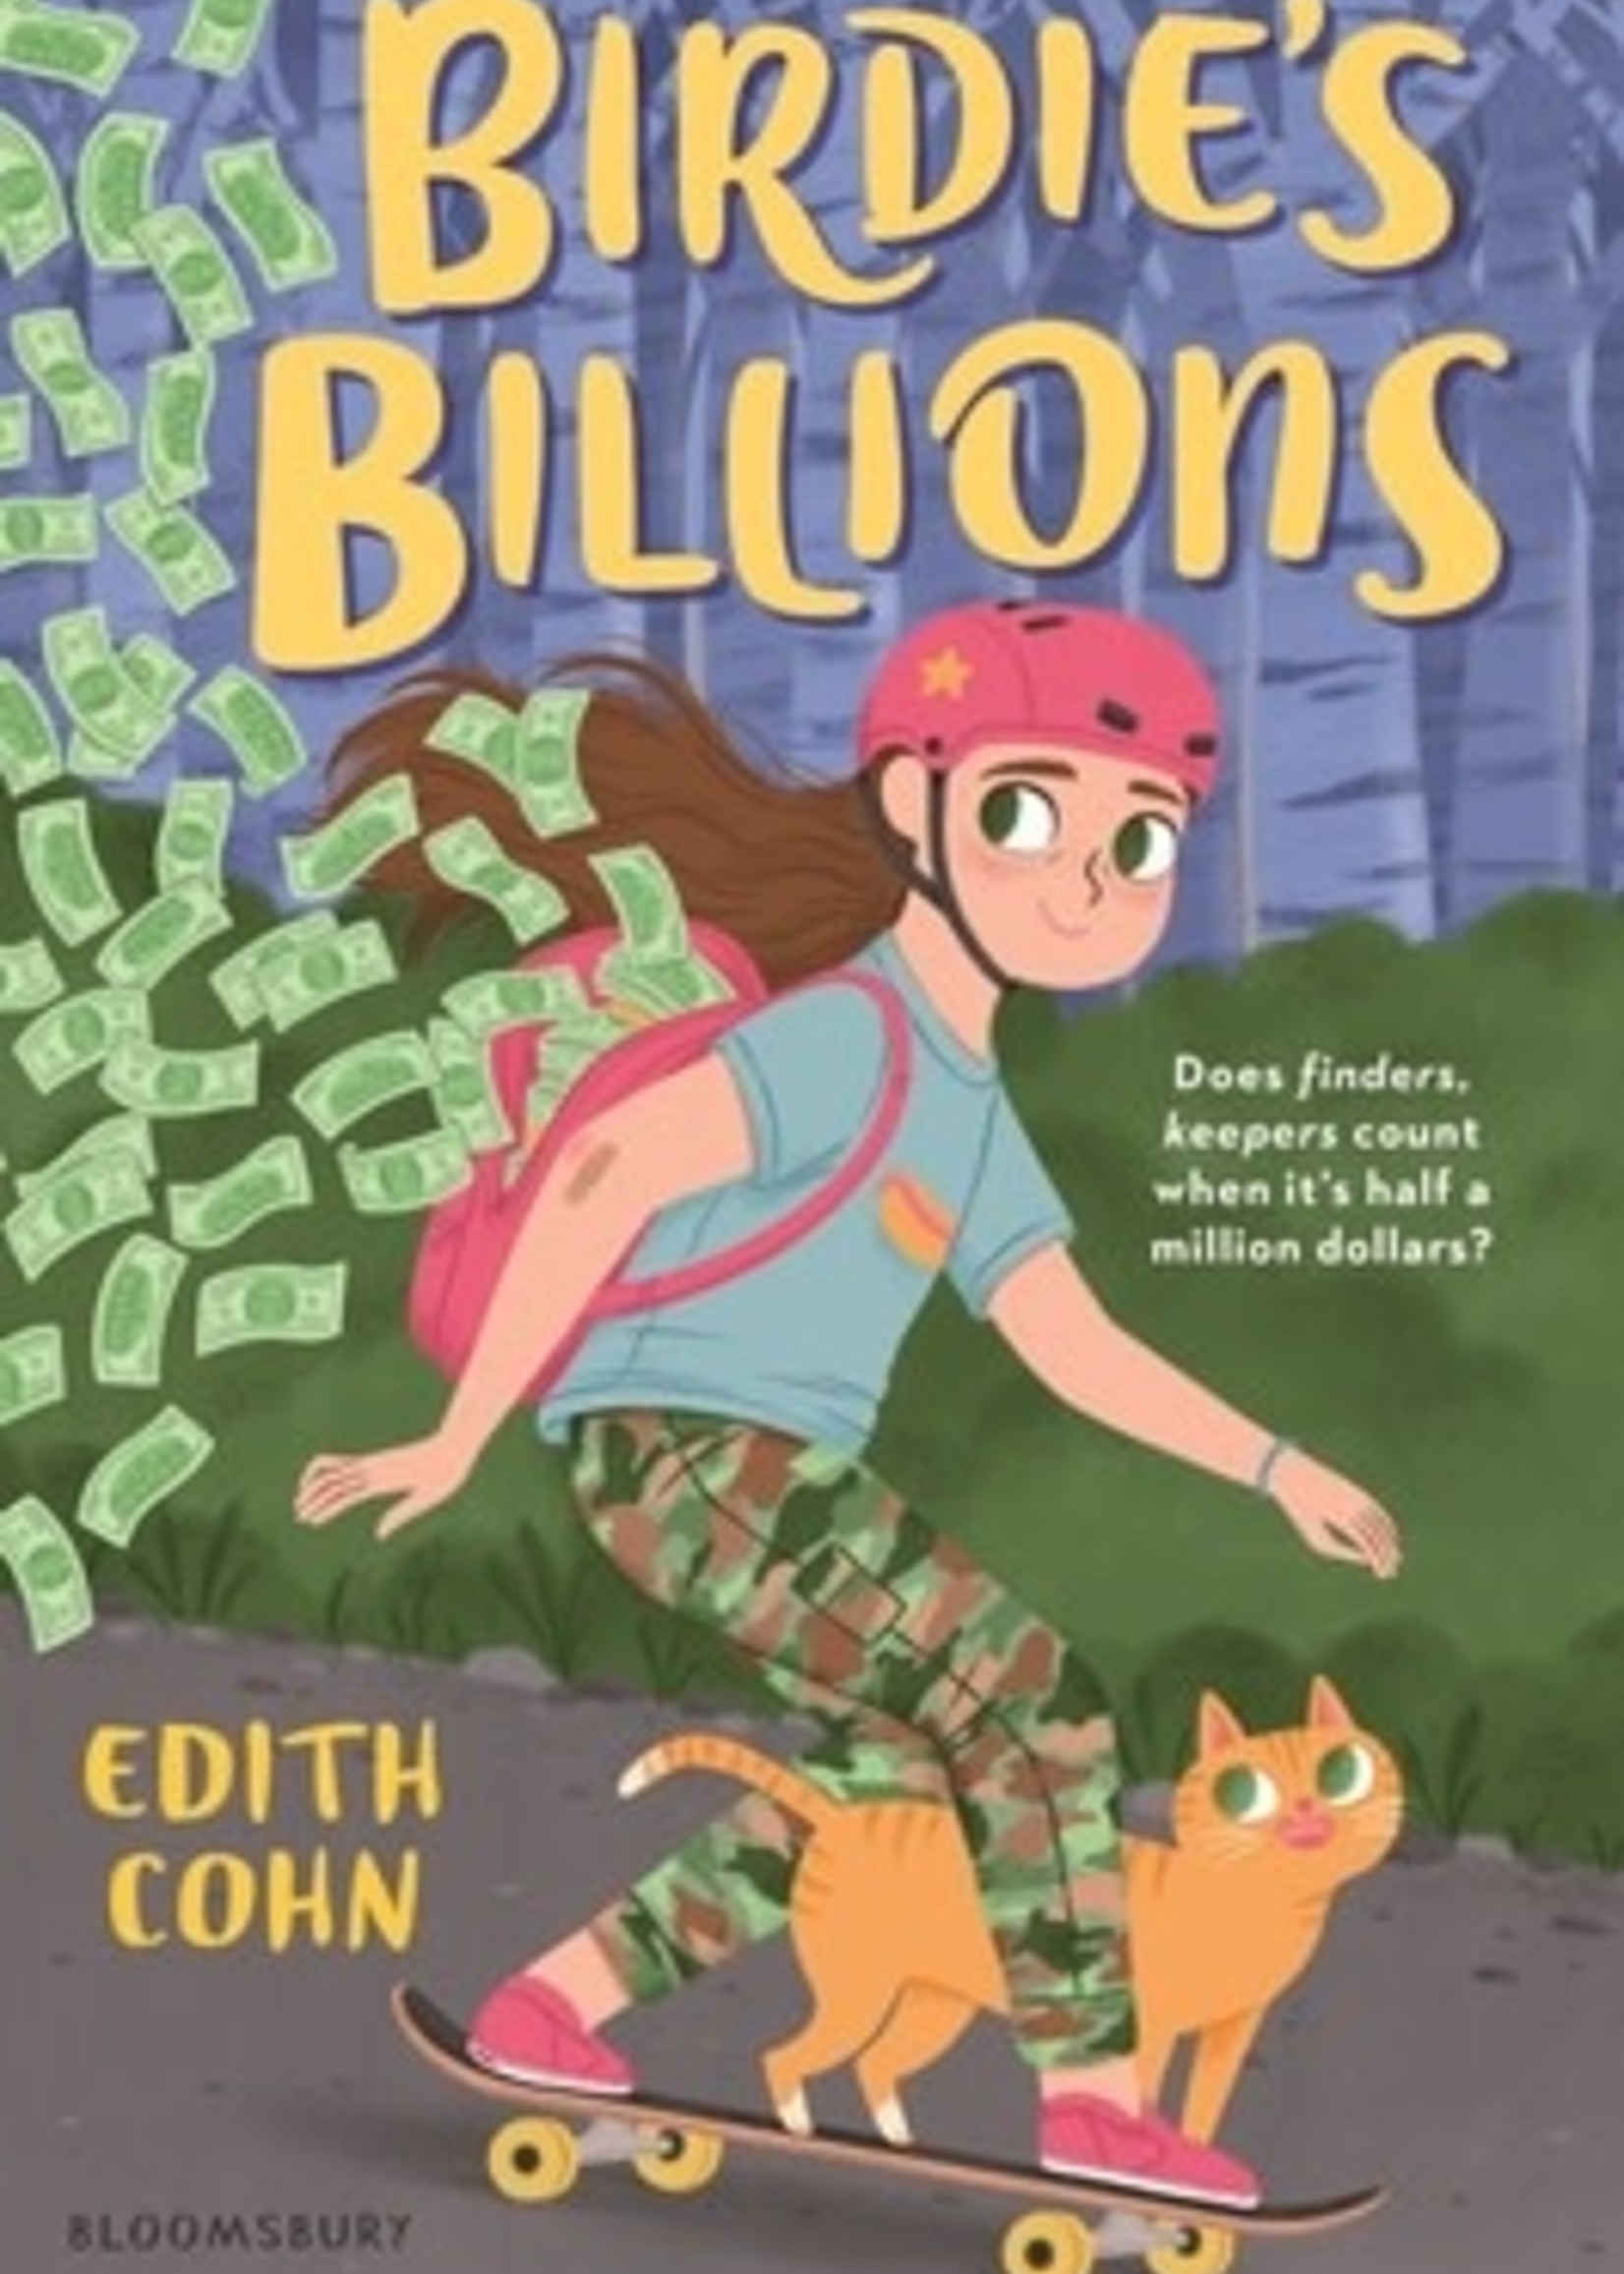 Birdie's Billions by Edith Cohn